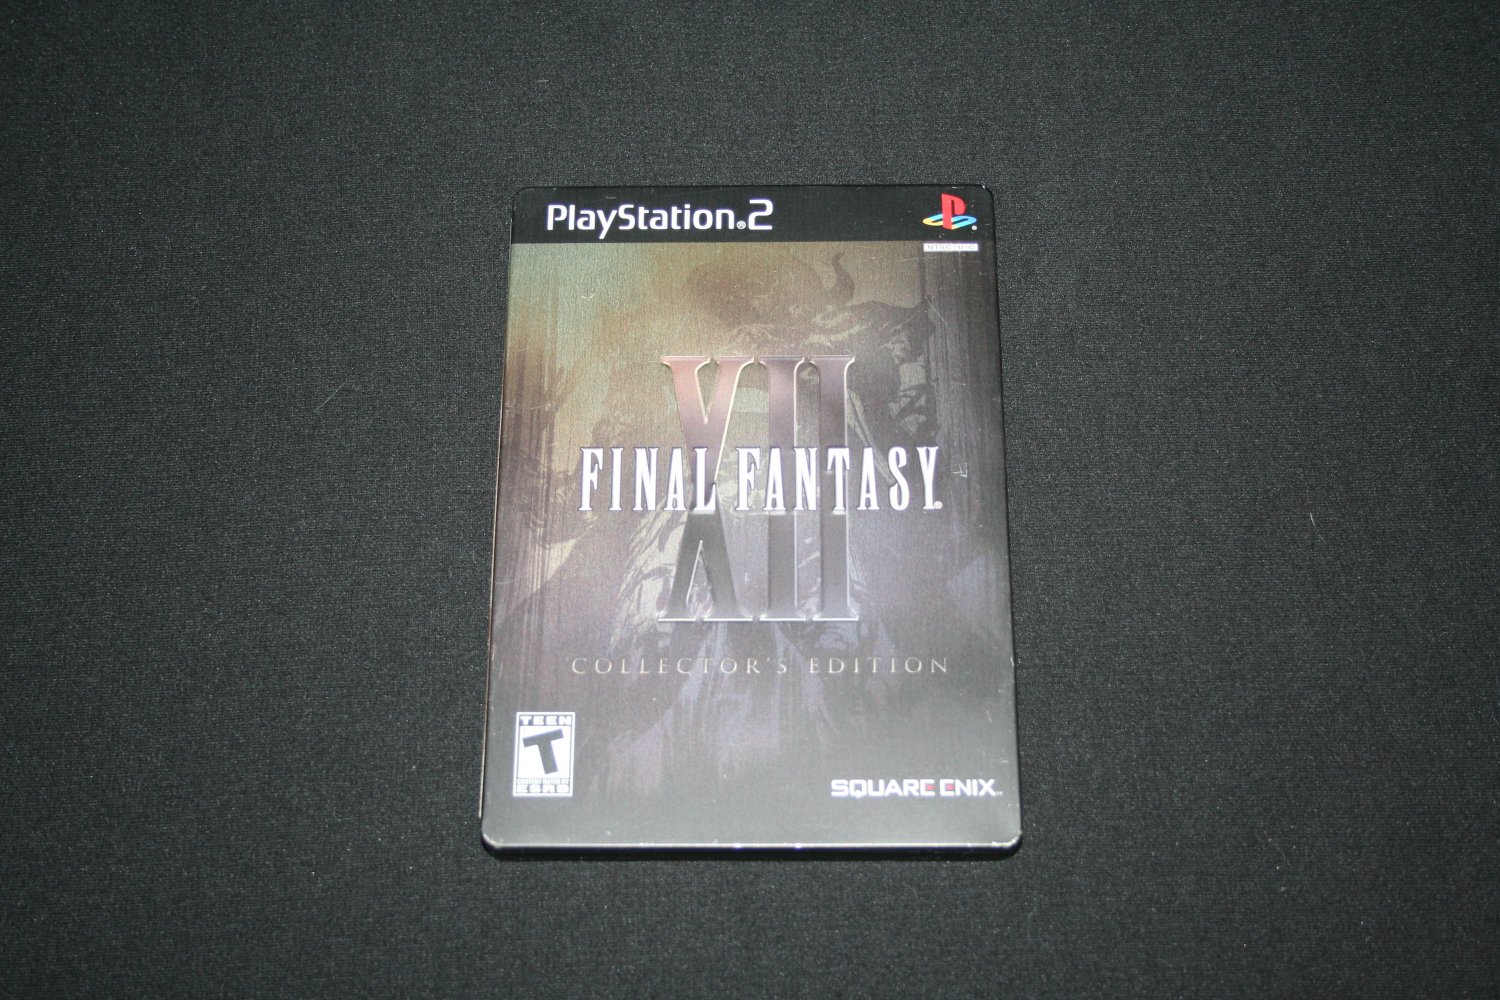 Final Fantasy Xii Collector S Edition Playstation 2